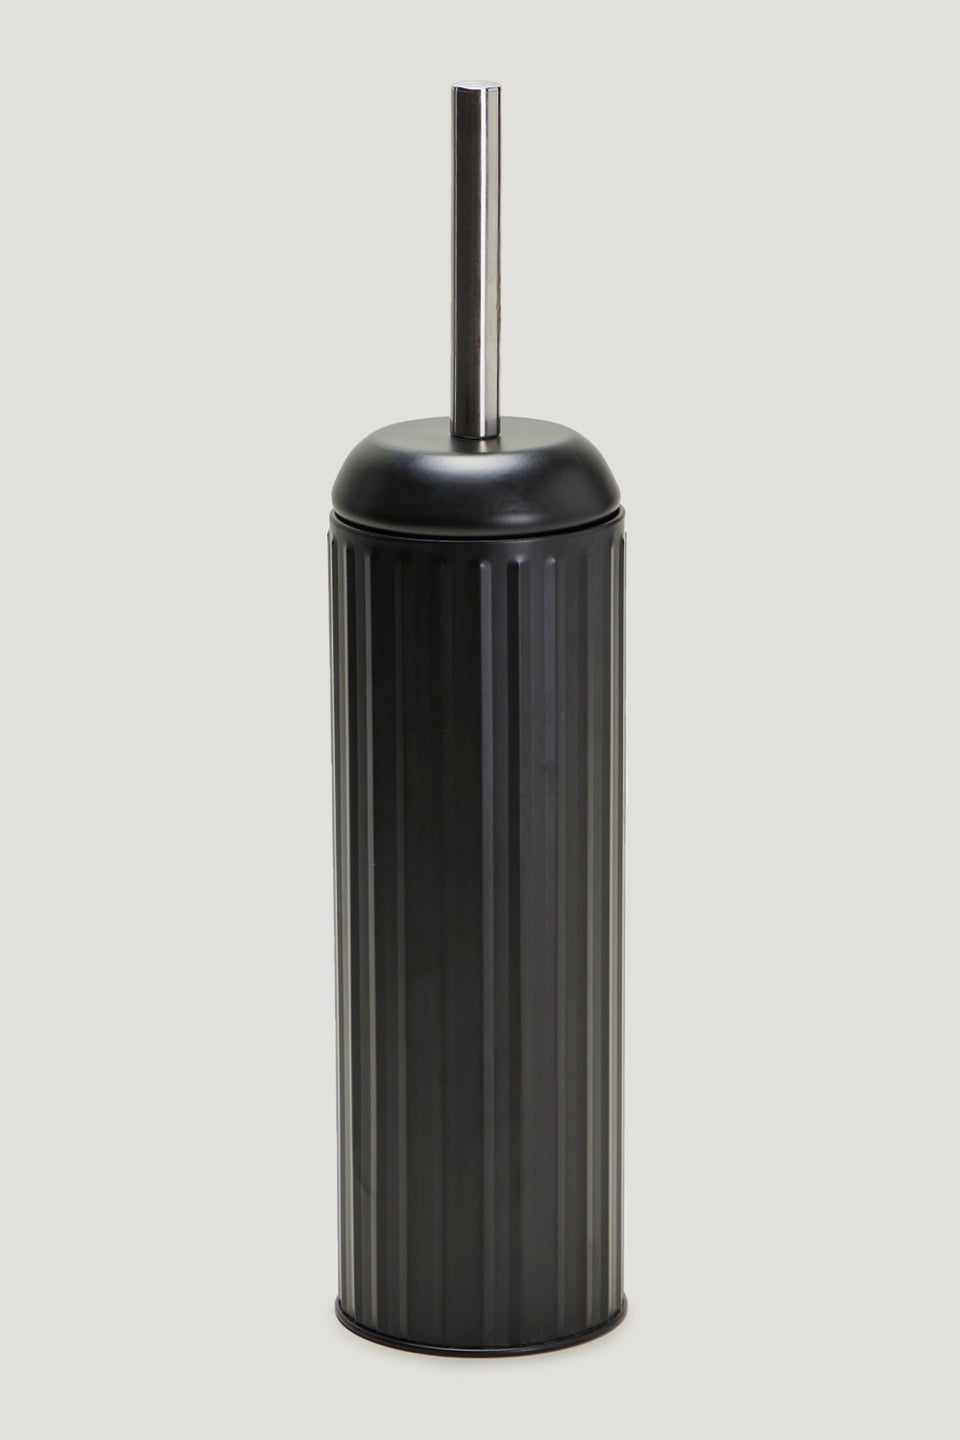 Black Ridged Metal Toilet Brush (41cm x 9cm)